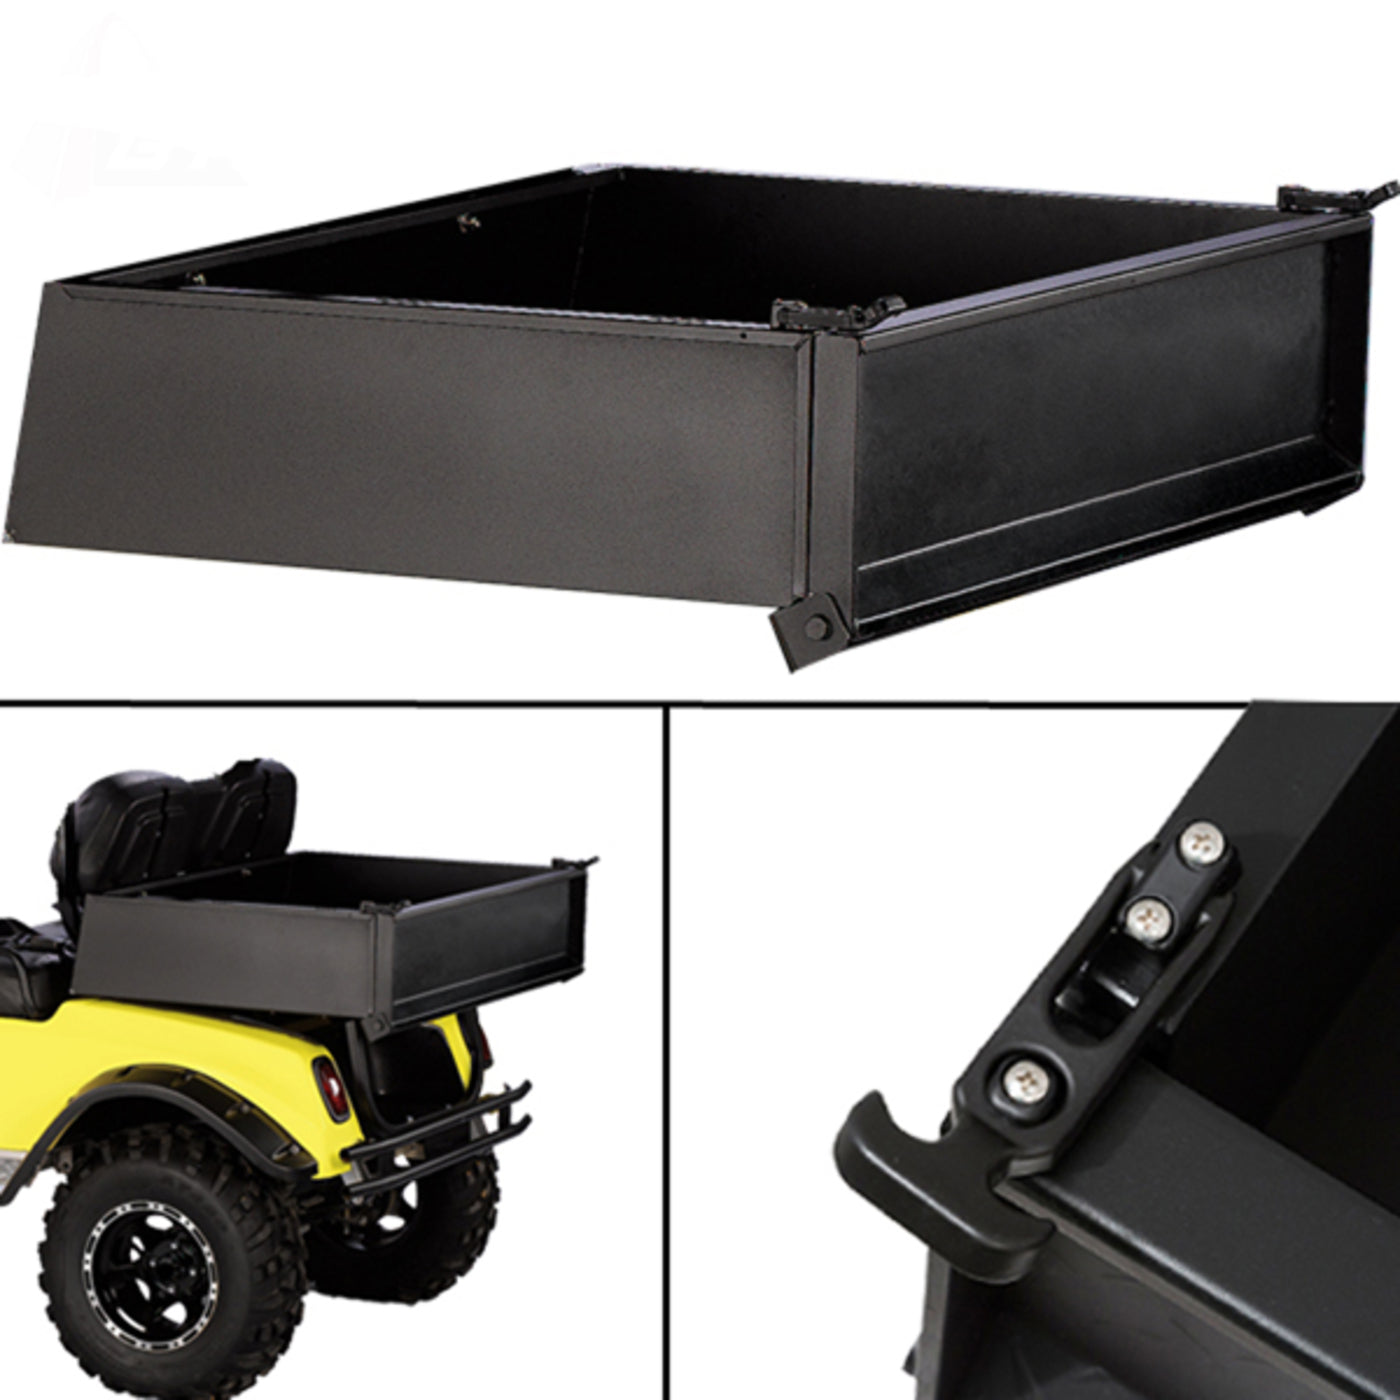 GTW¬Æ Black Steel Cargo Box (Universal Fit)